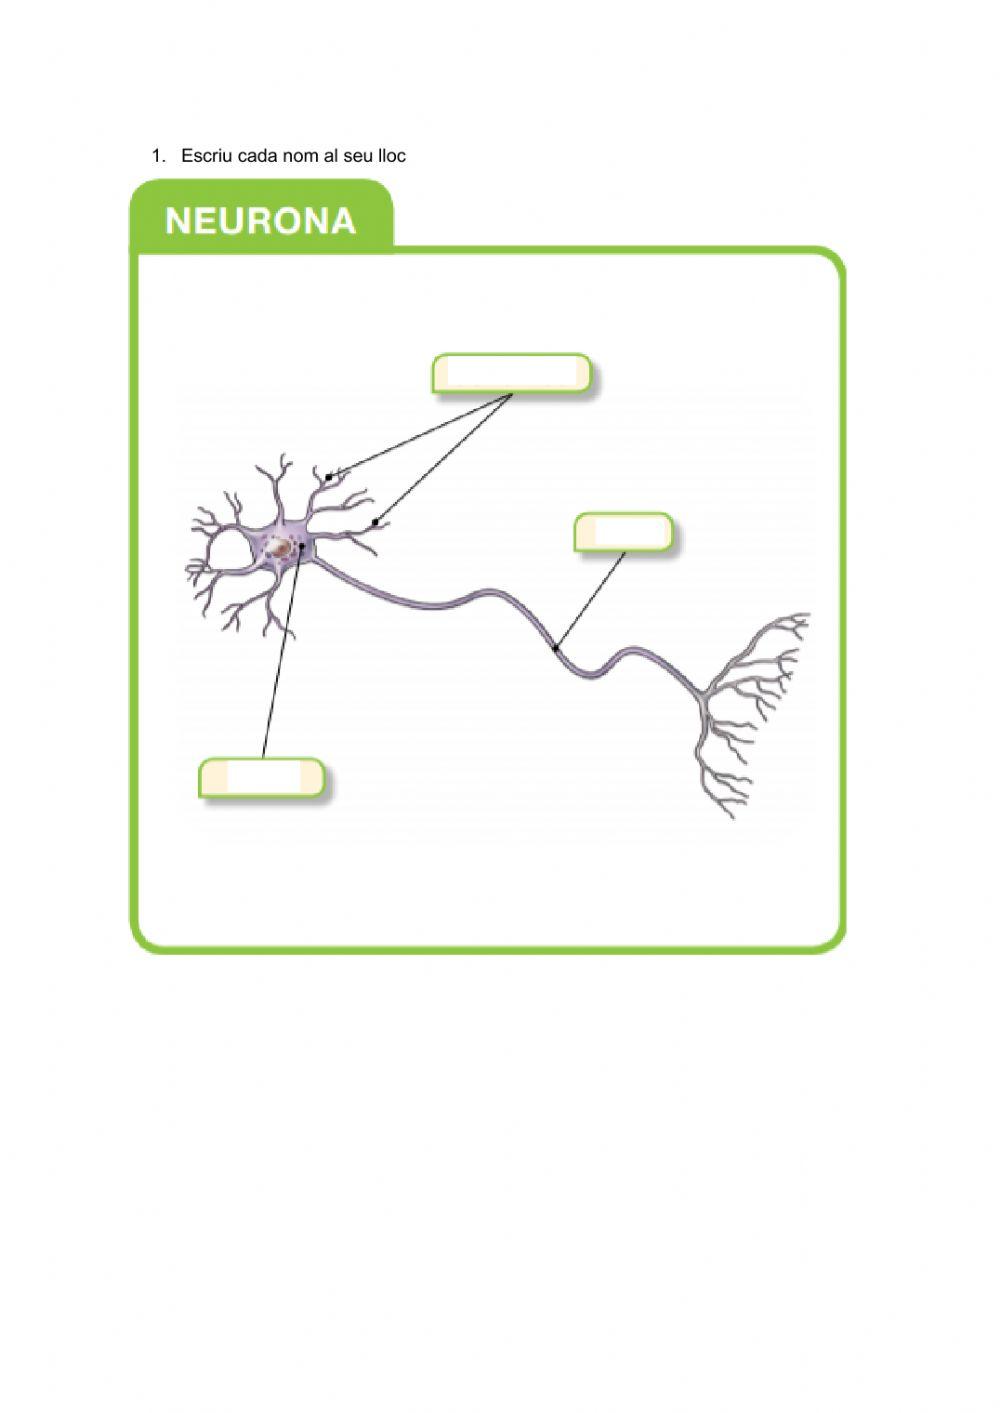 El sistema nerviós